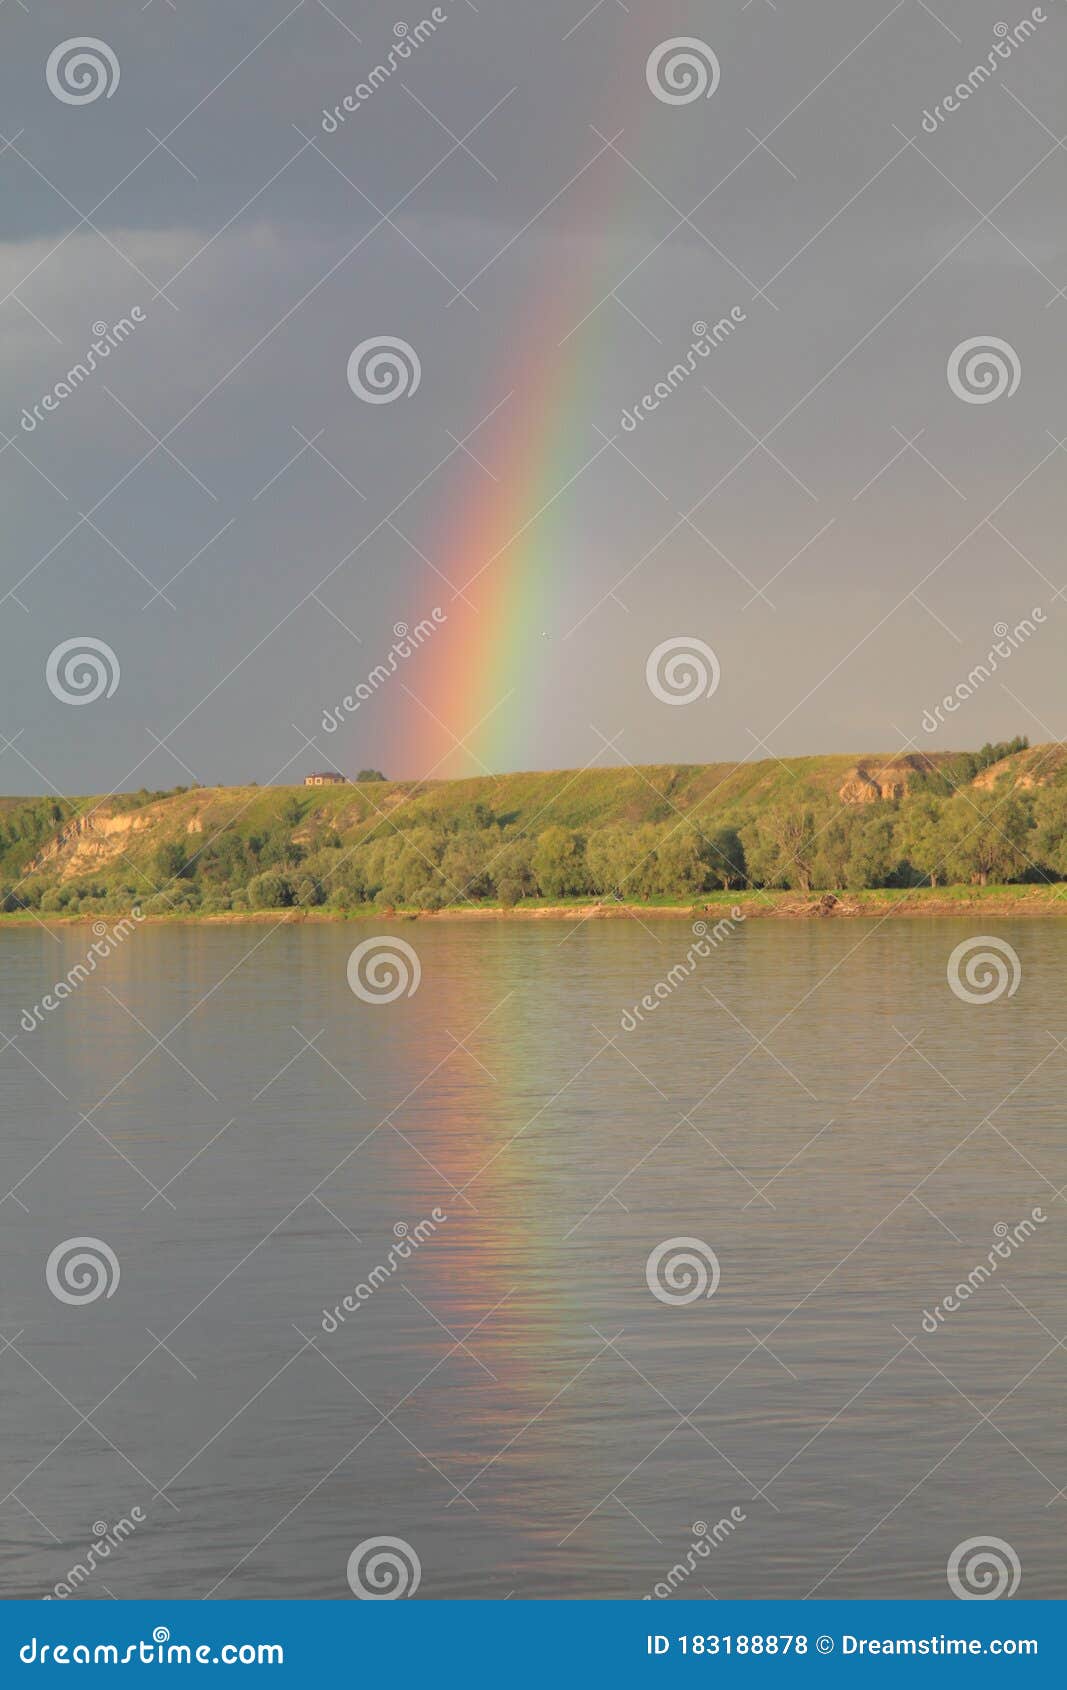 rainbow over the irtysh